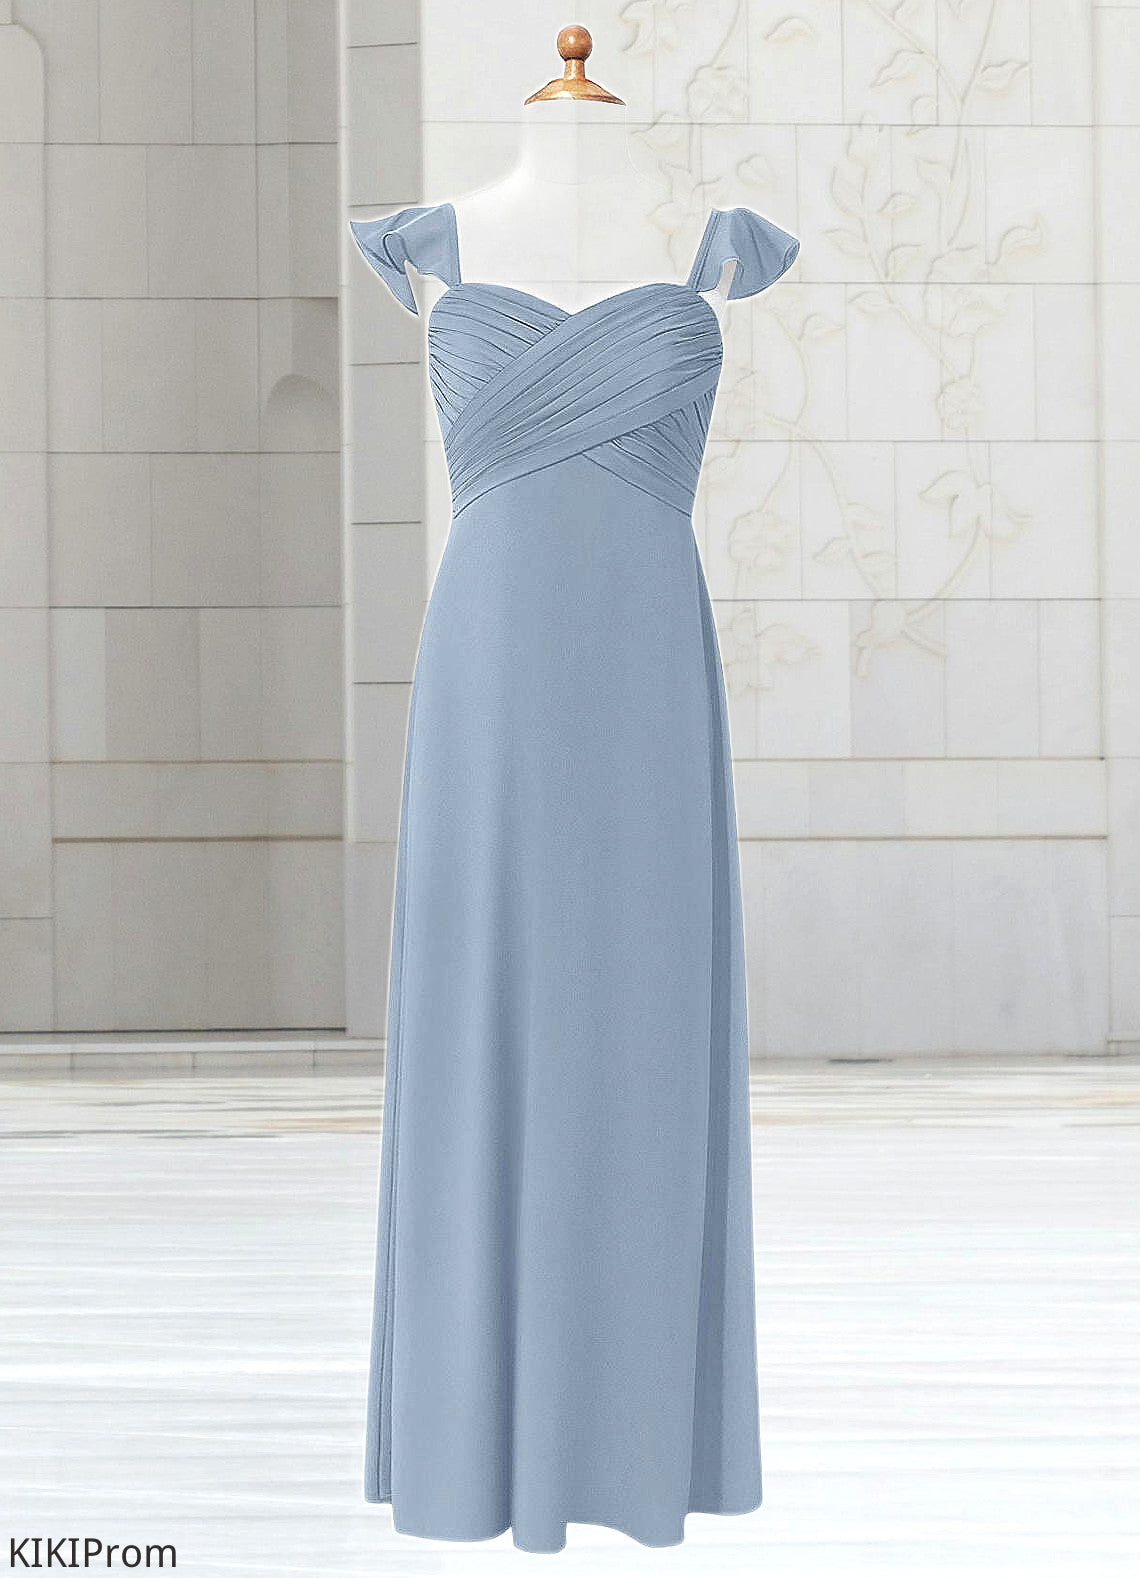 Aliya A-Line Sweetheart Neckline Chiffon Floor-Length Junior Bridesmaid Dress dusty blue DZP0022869